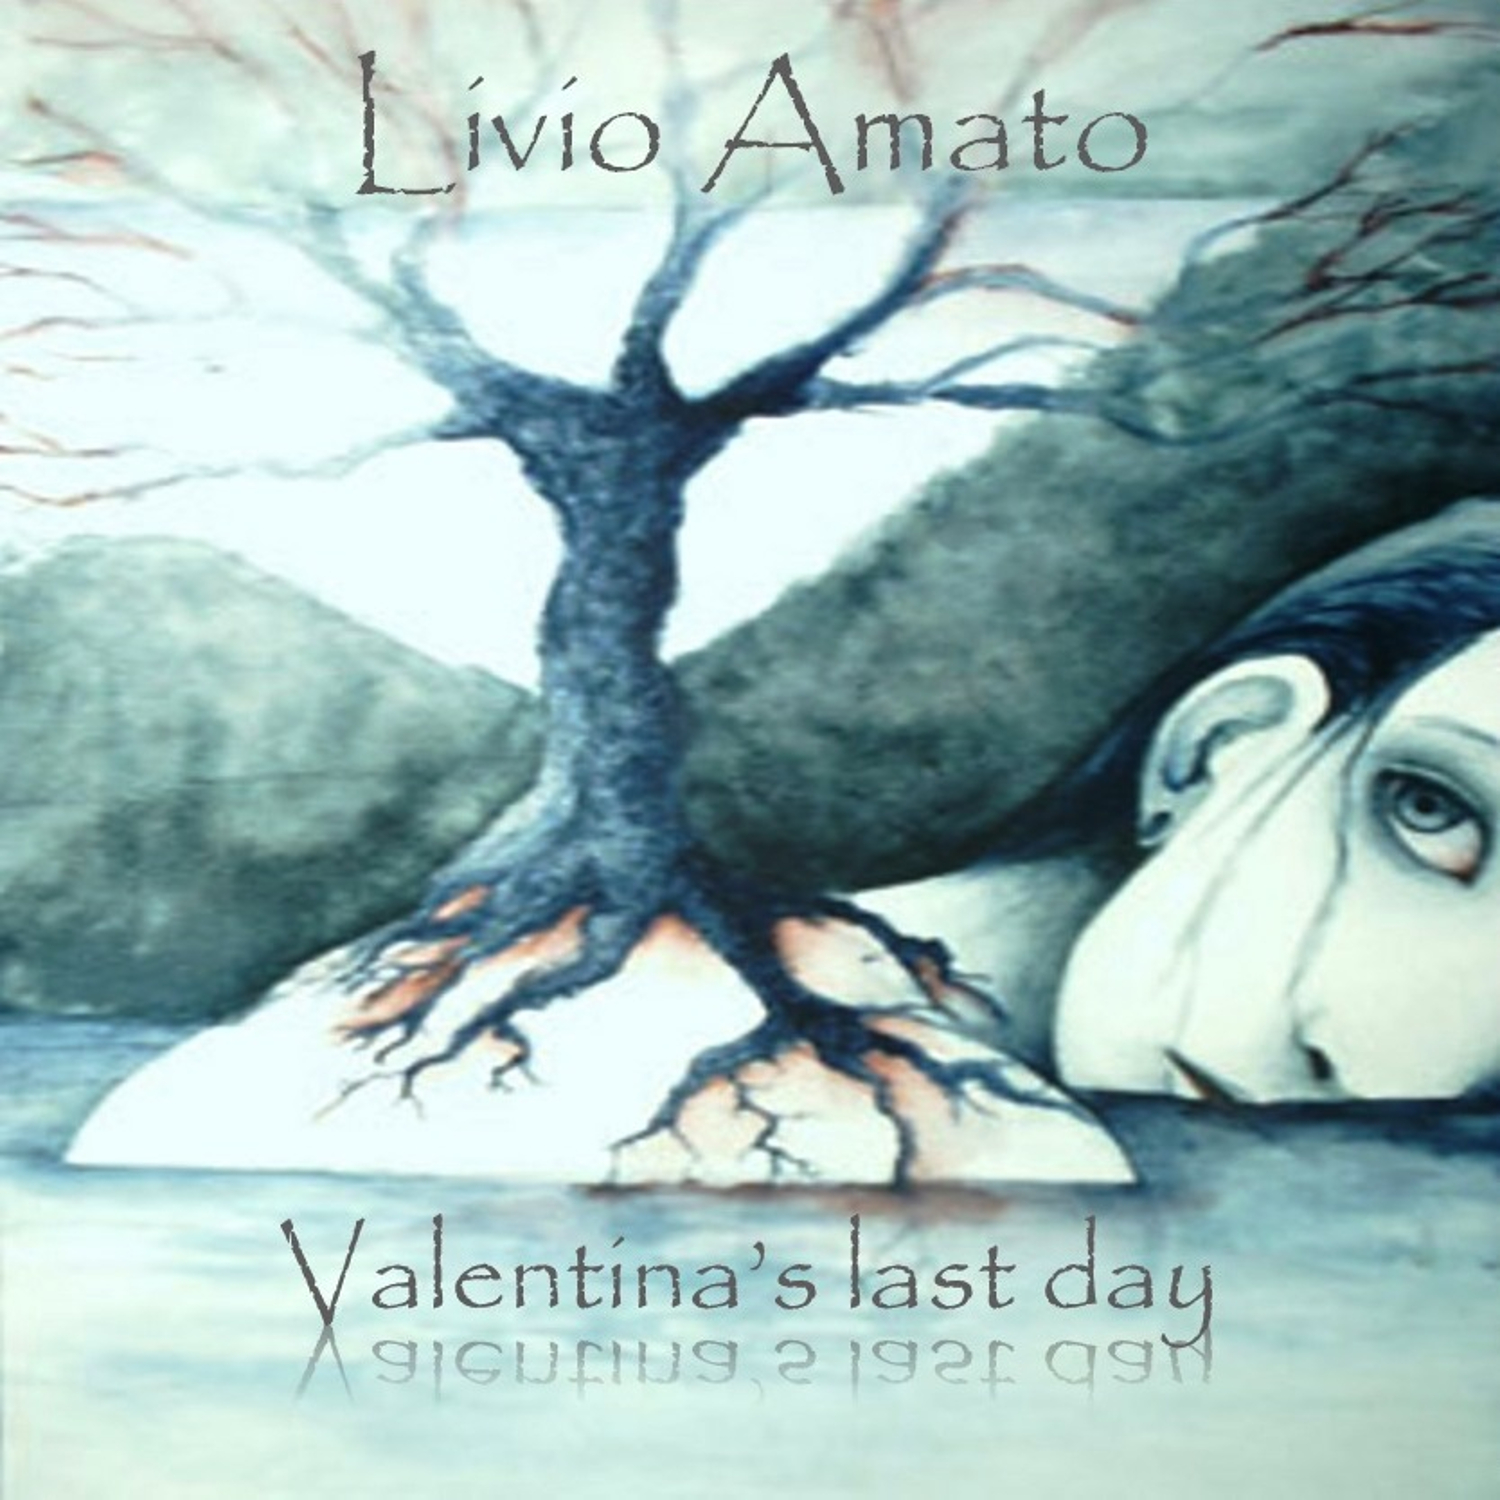 livio amato valentina's last day valentina_grondana